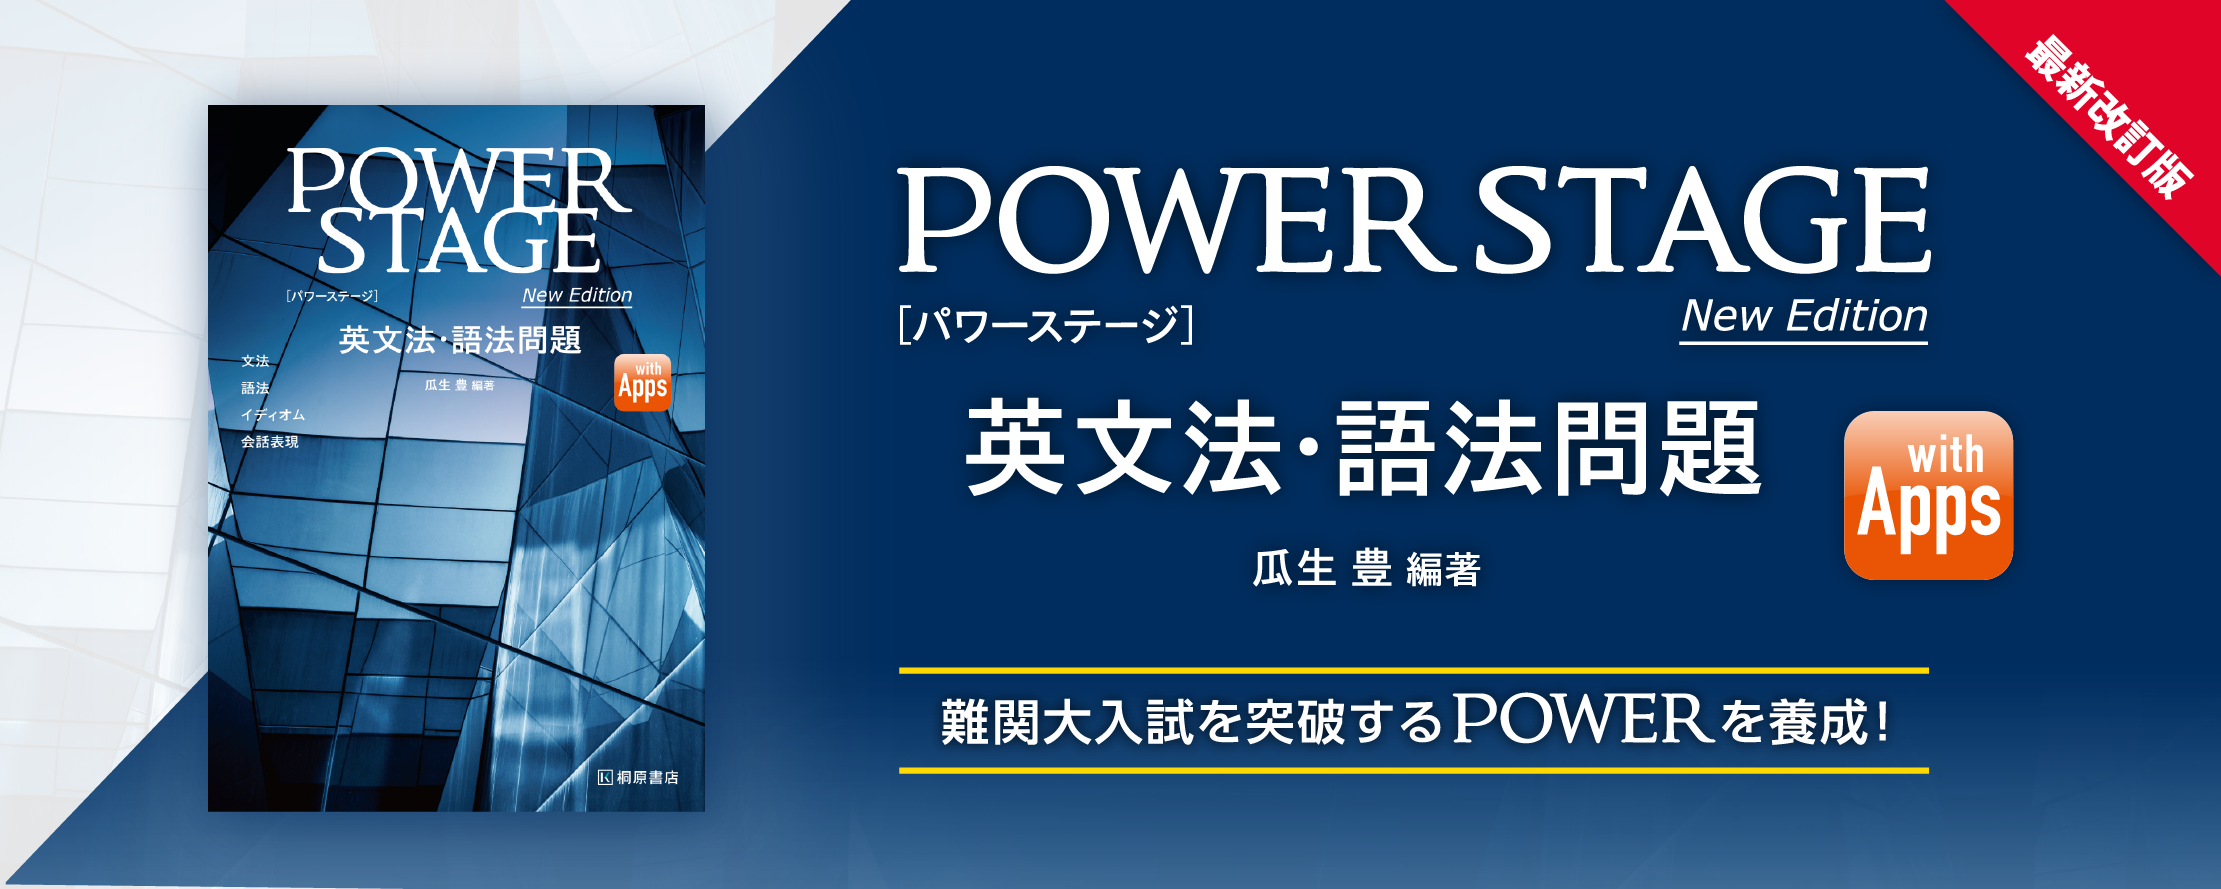 POWER STAGE英文法・語法問題 New Edition